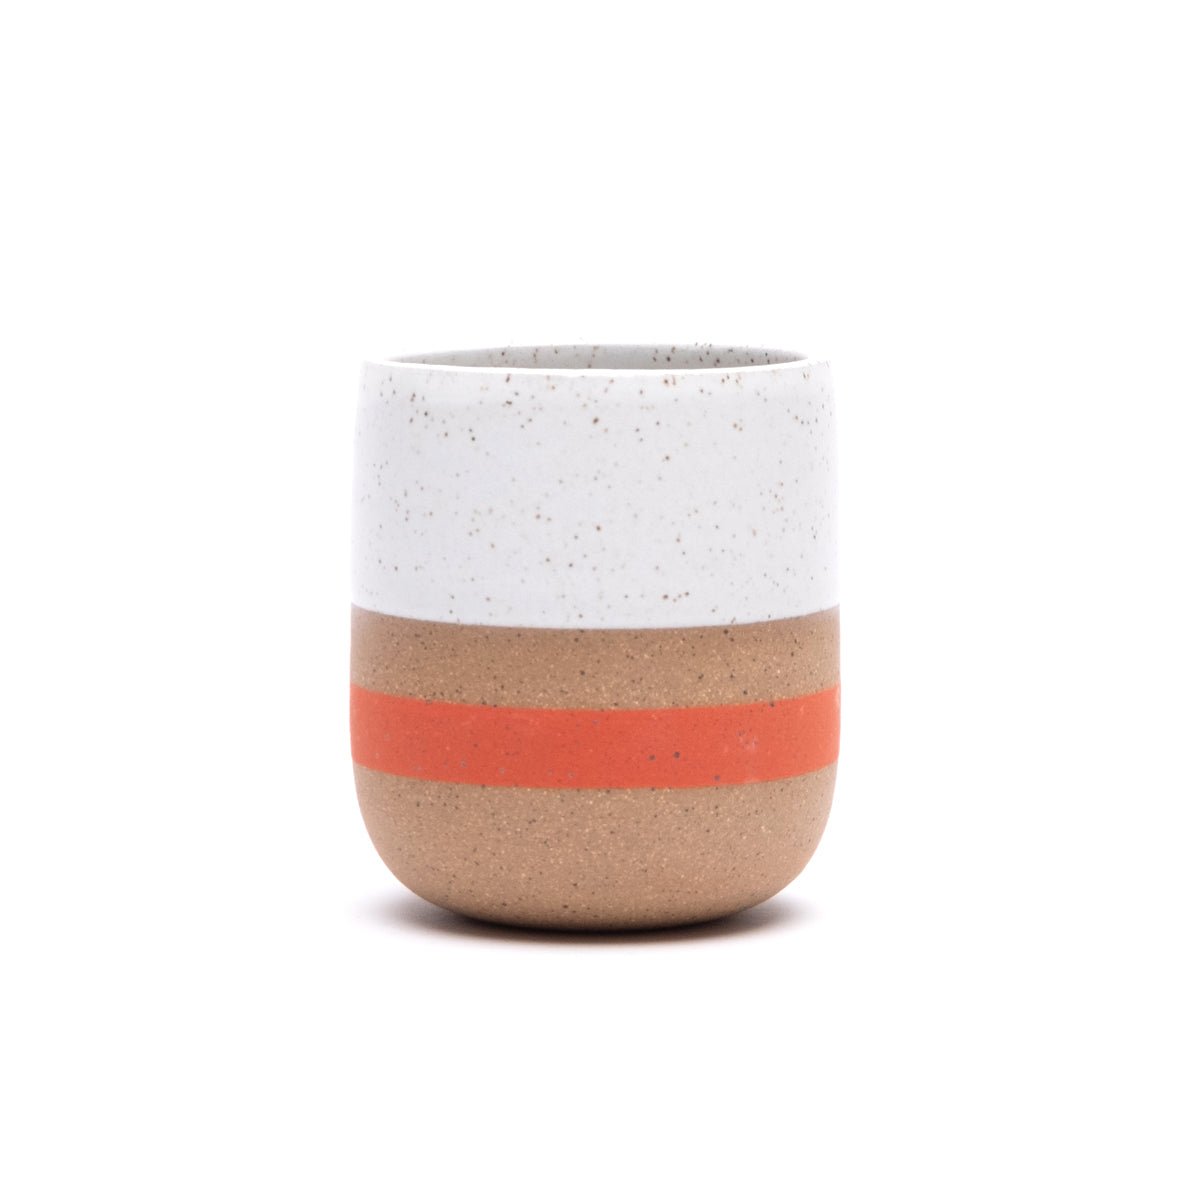 Handleless Mug with white satin glaze and orange stripe. Made in Hood River, Oregon by Wolf Ceramics.